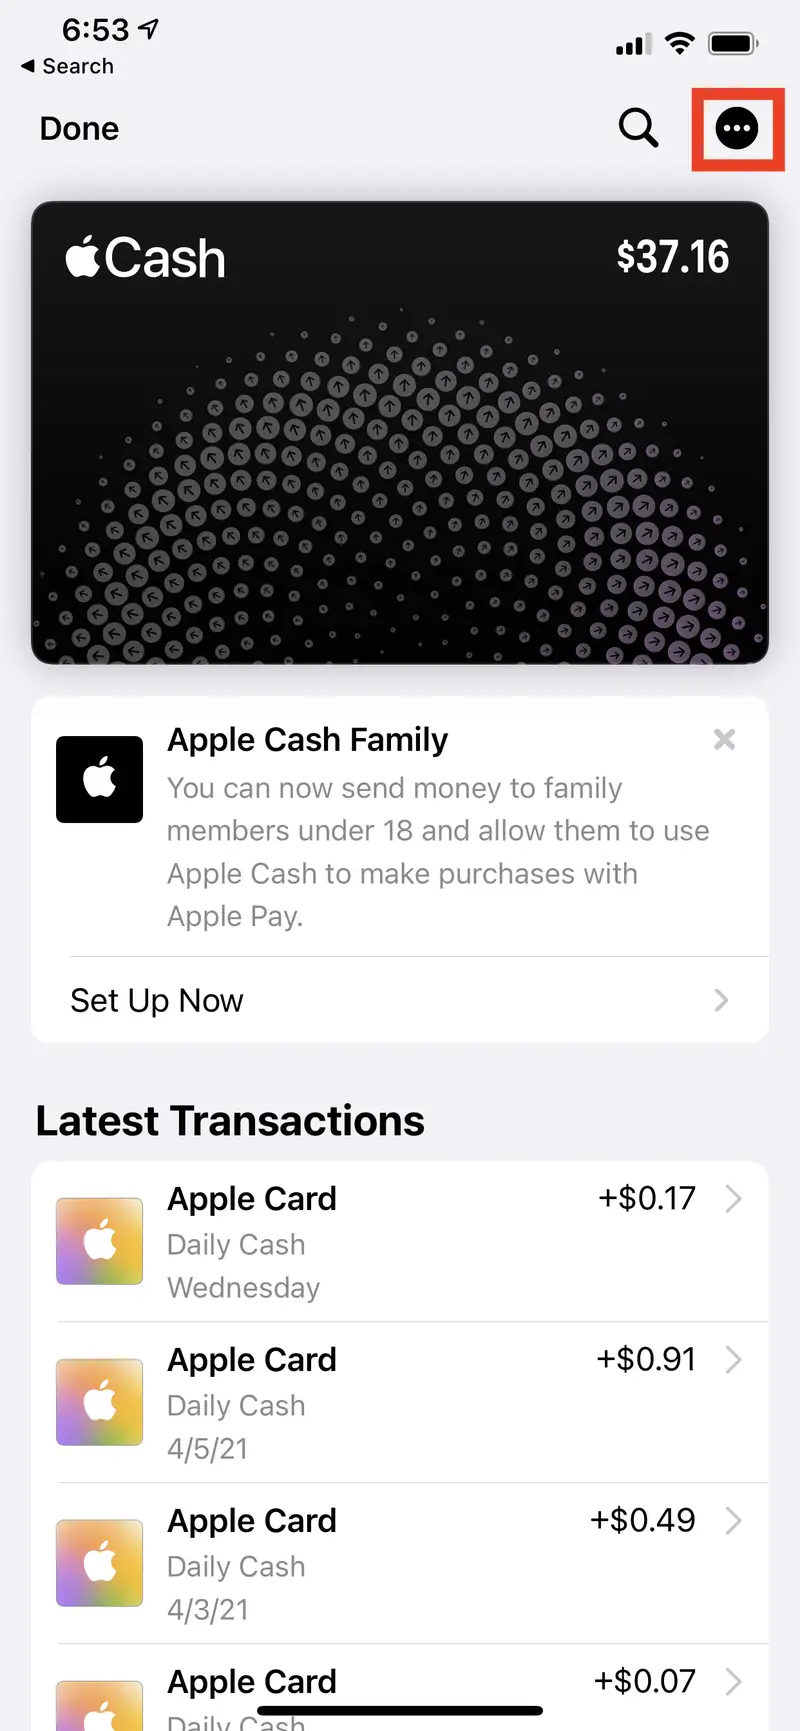 Apple Cash or Apple Pay?